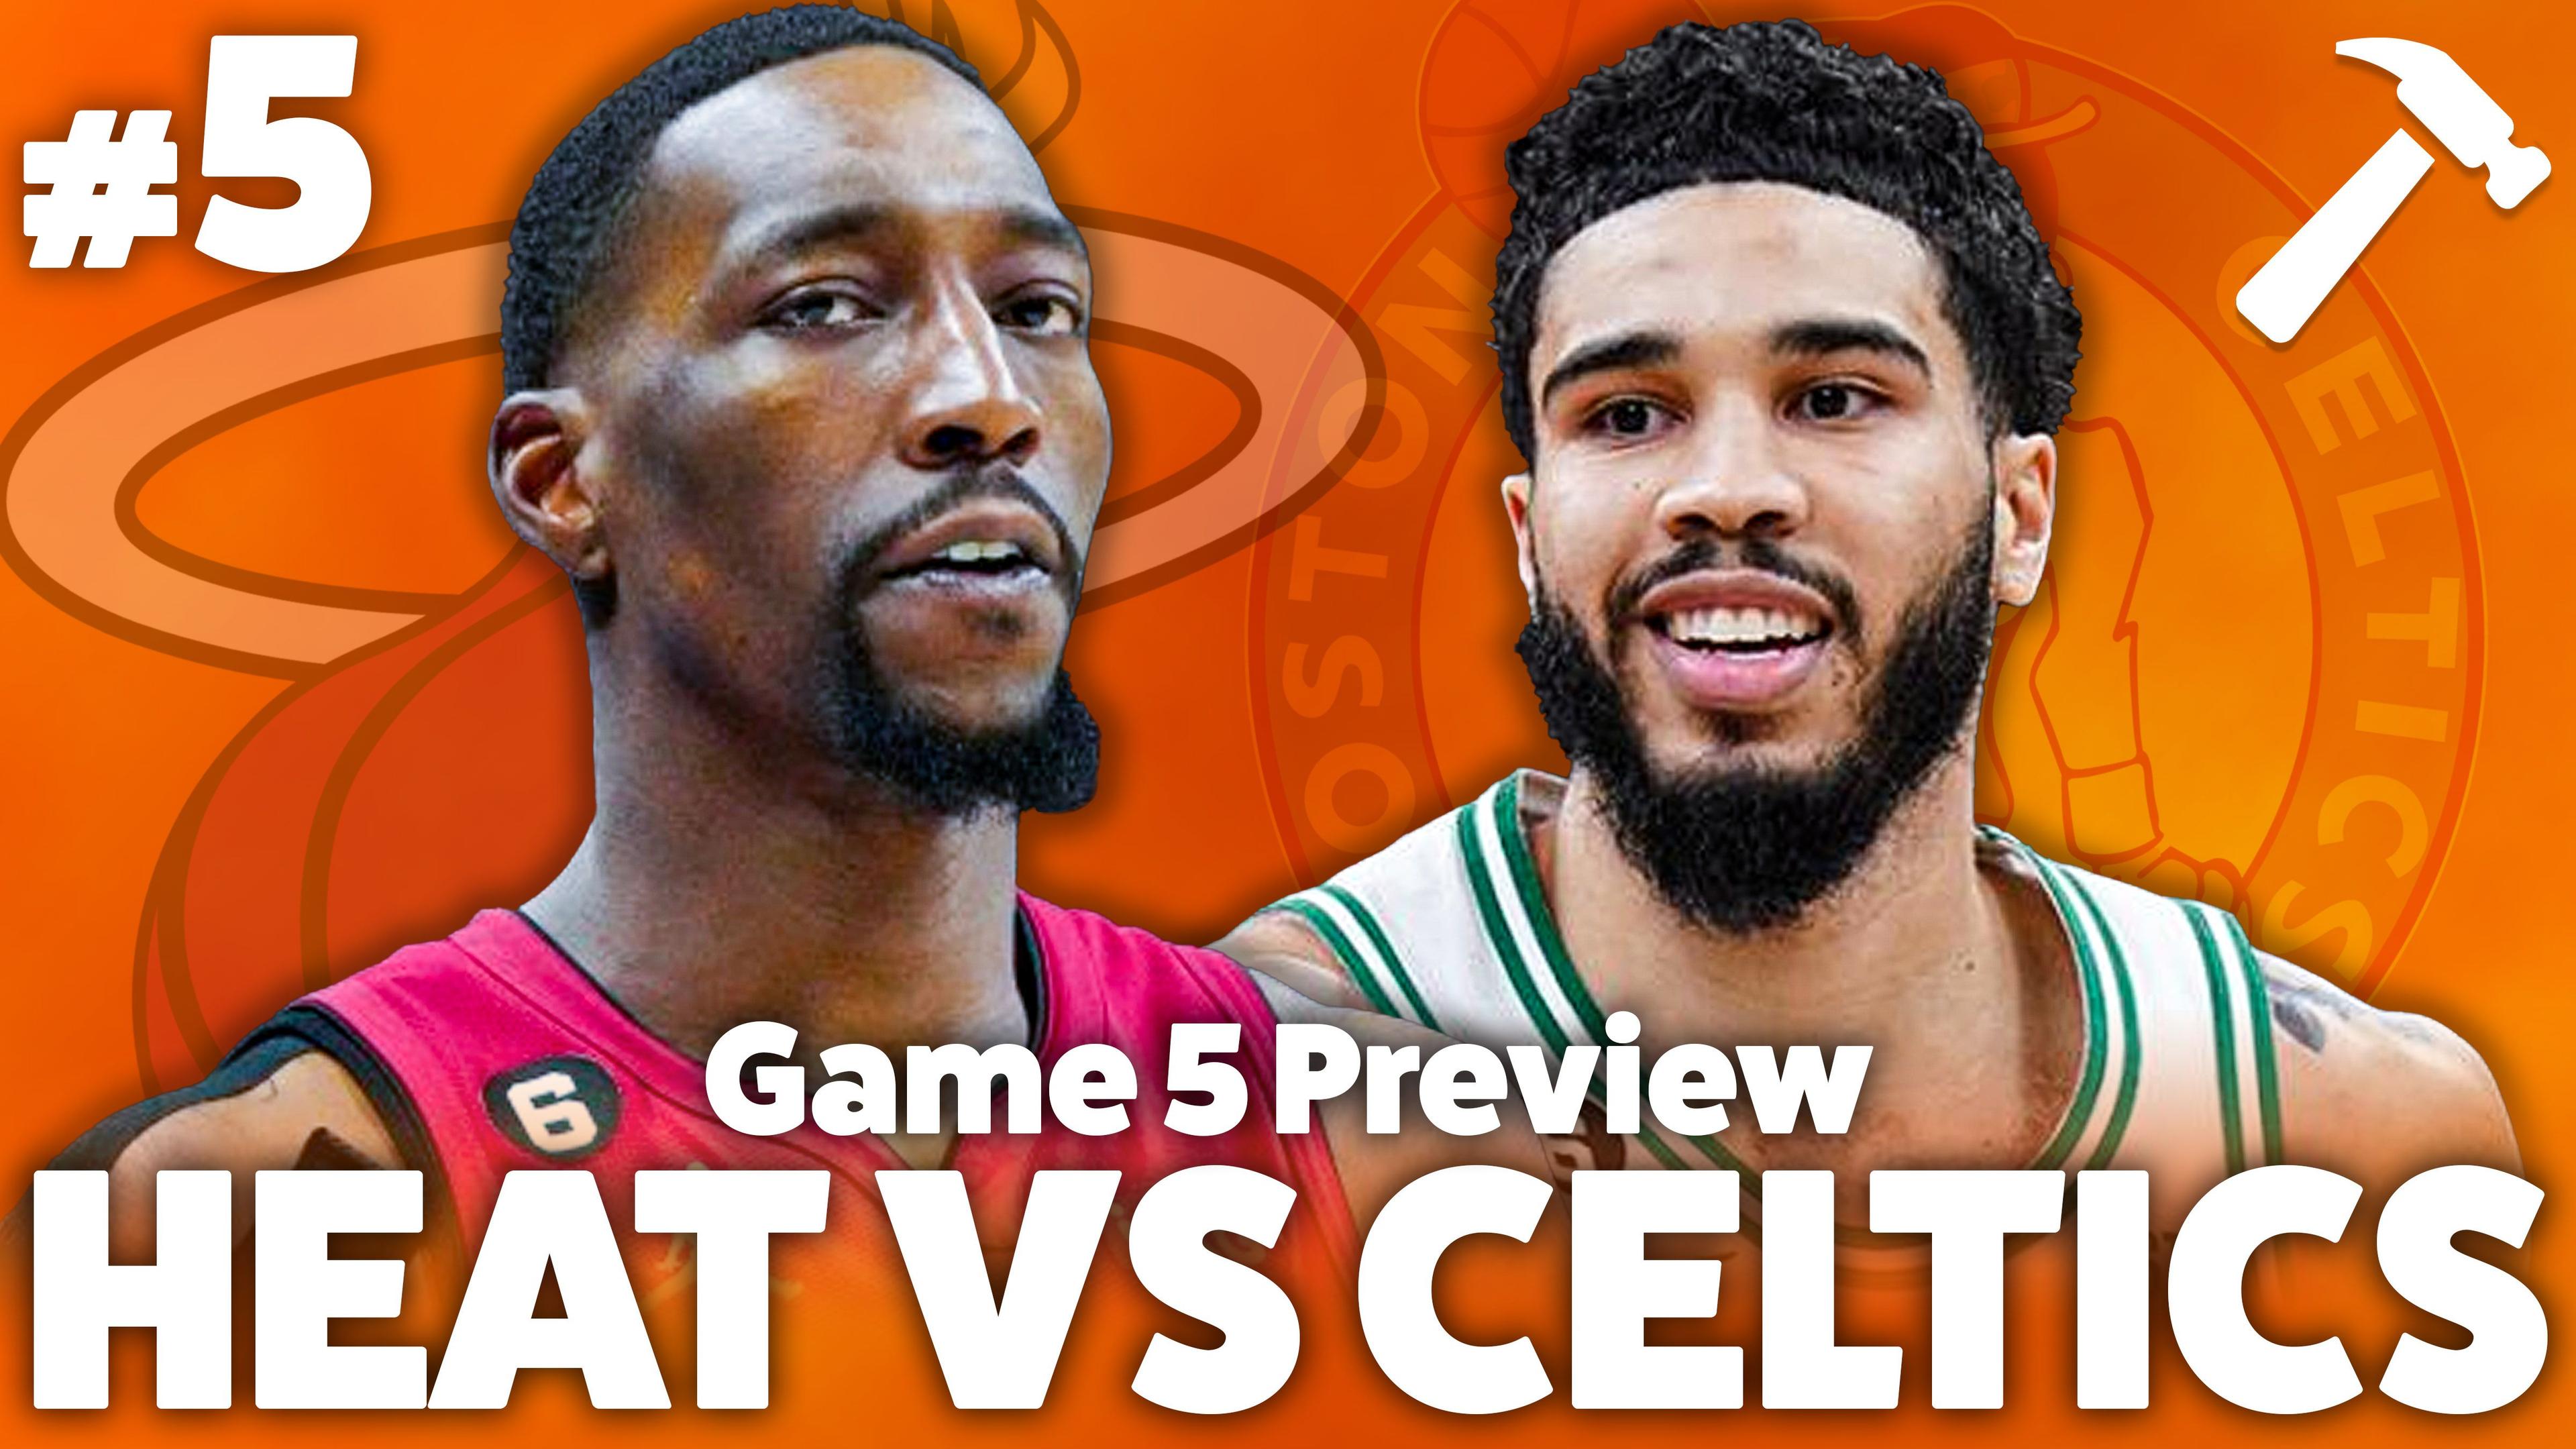 Heat vs Celtics game 5 preview.jpg